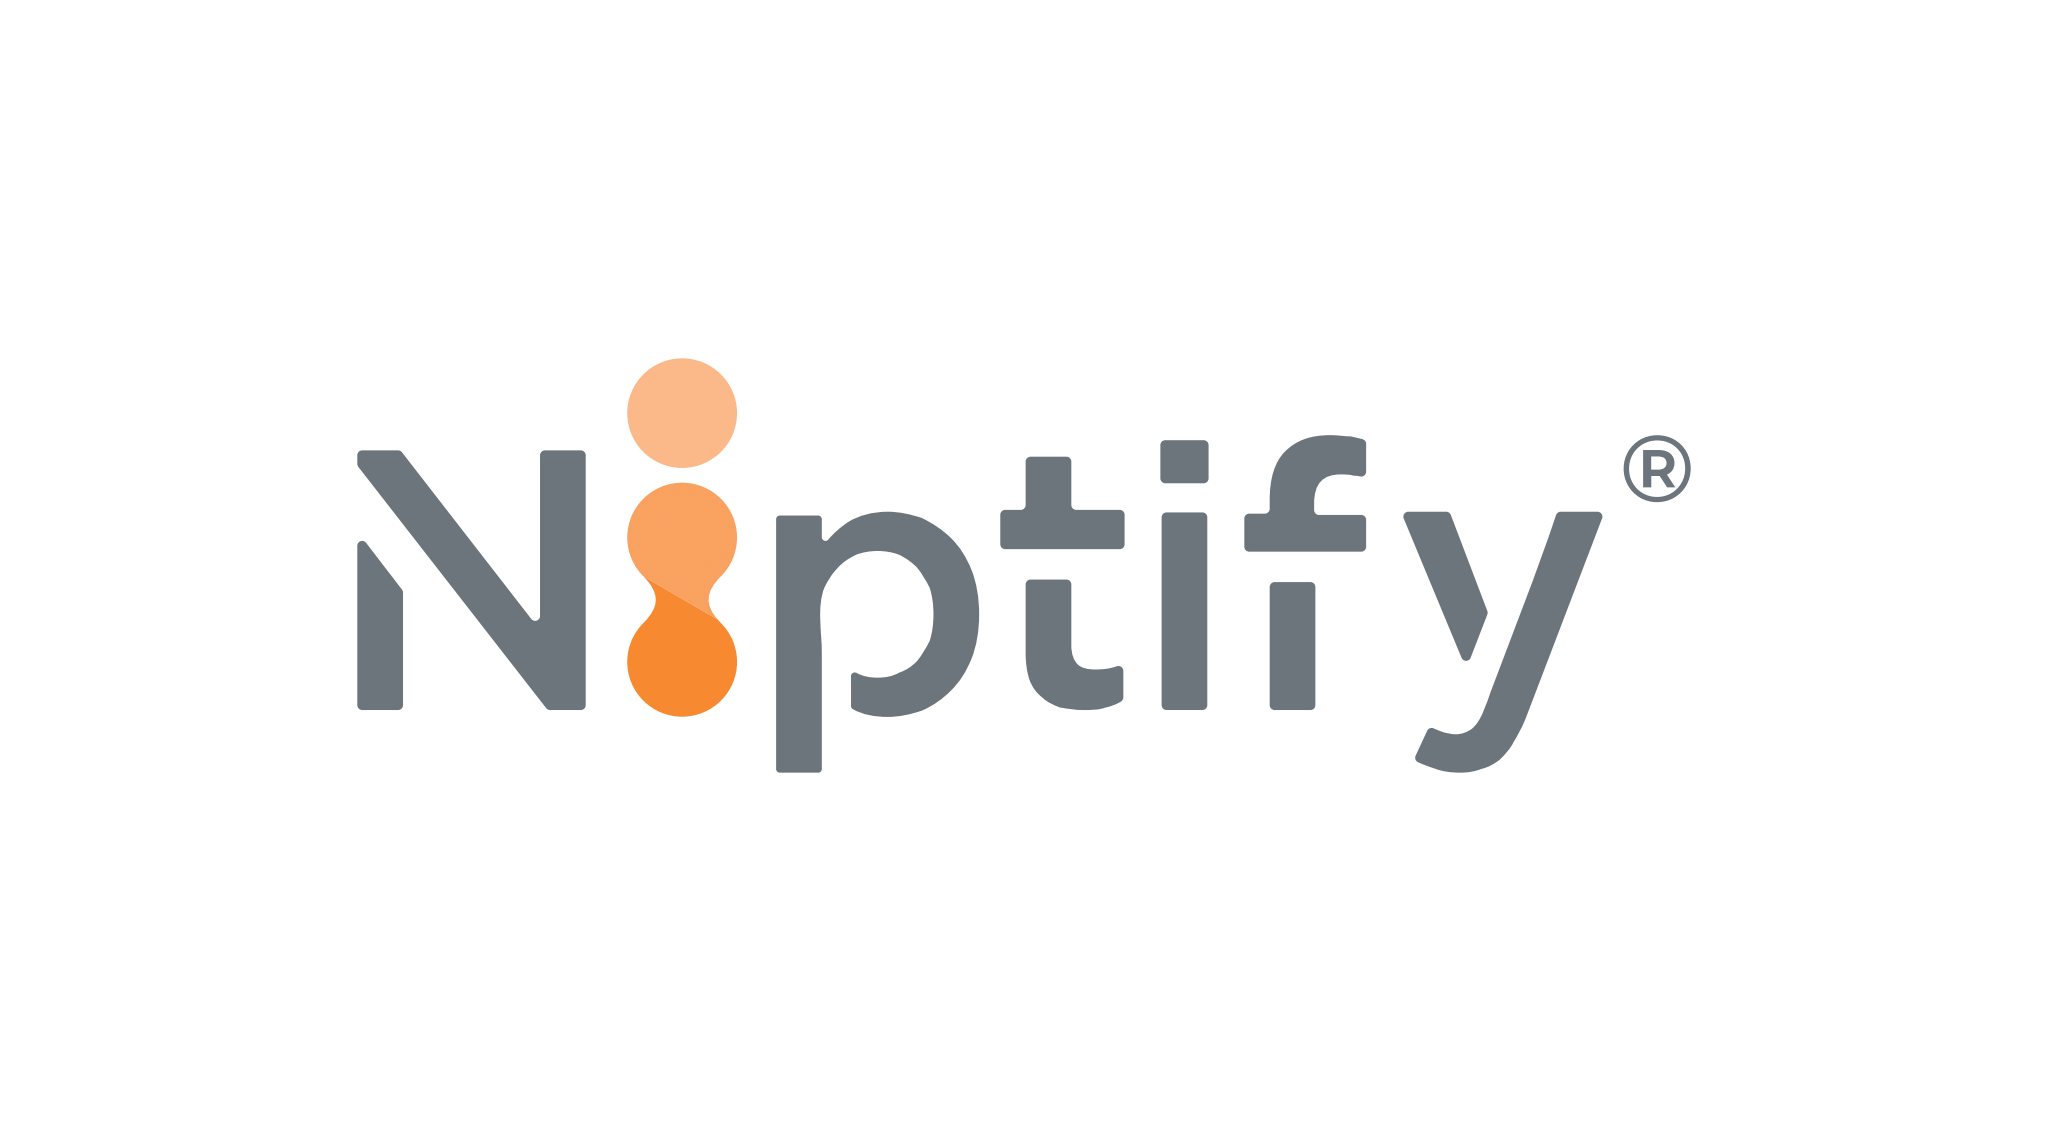 niptify logo 2